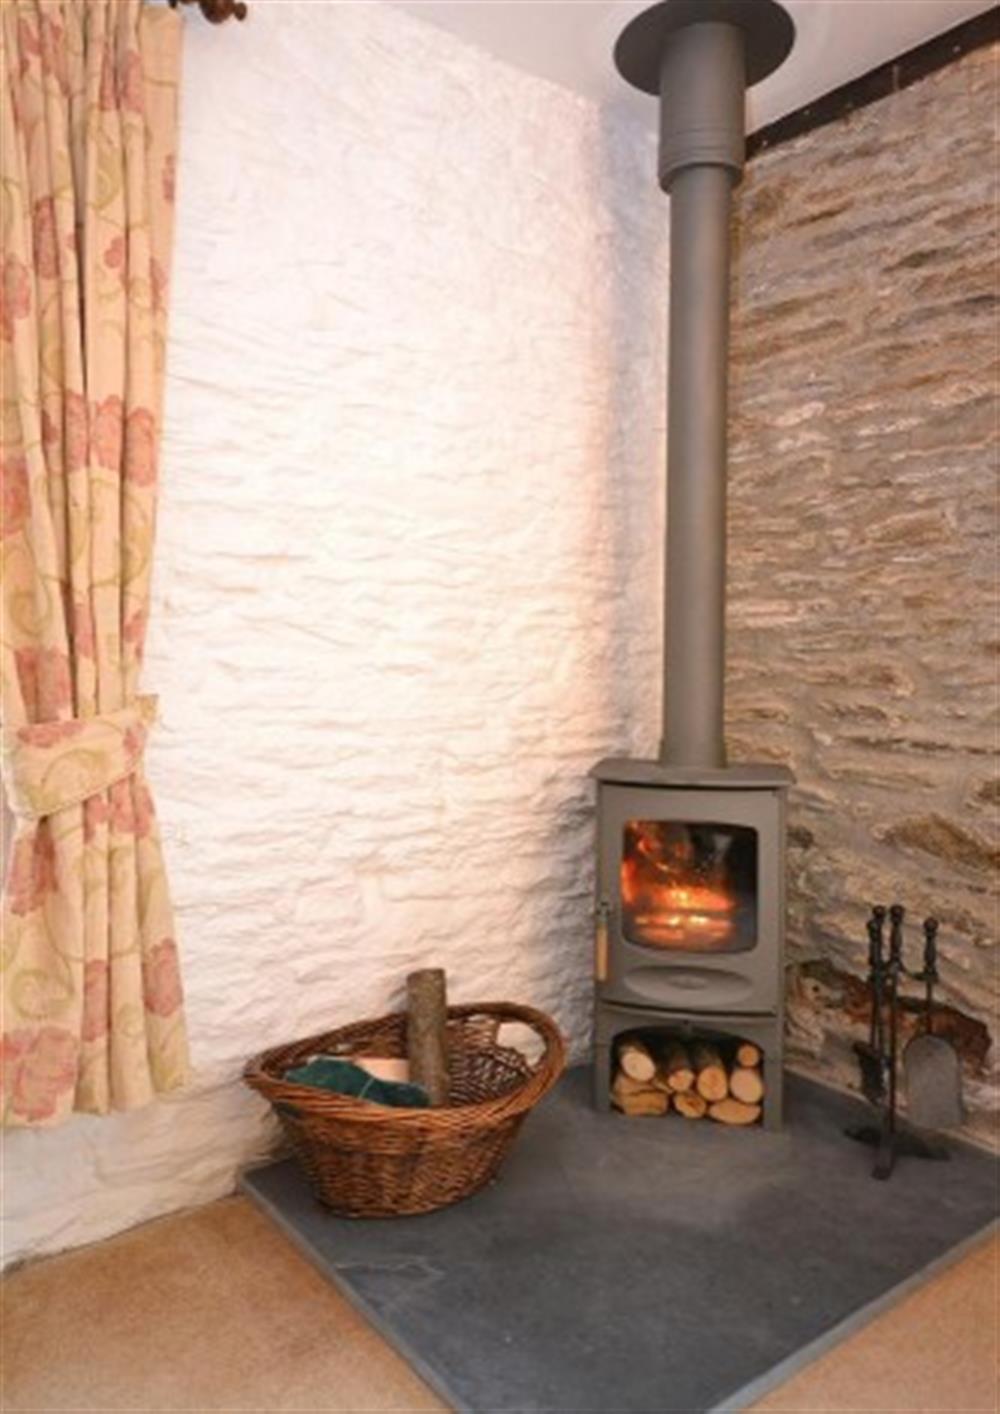 The modern woodburner stove.